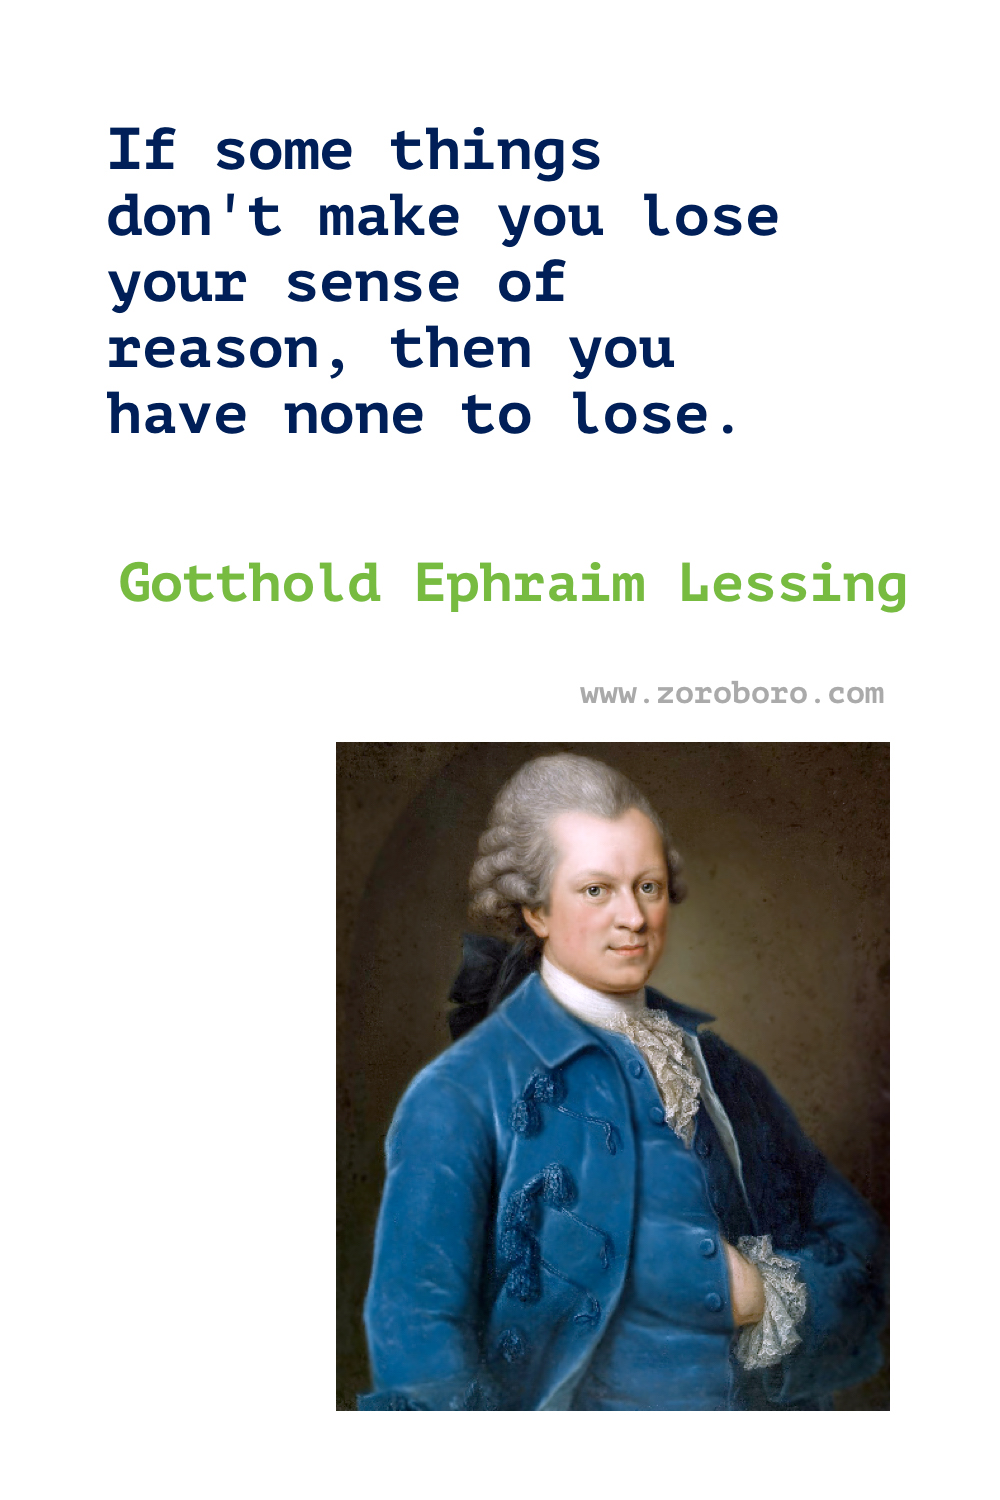 Gotthold Ephraim Lessing Quotes/ zitate. Gotthold Ephraim Lessing Books Quotes. Gotthold Ephraim Lessing Philosophy. Gotthold Ephraim Lessing zitate.